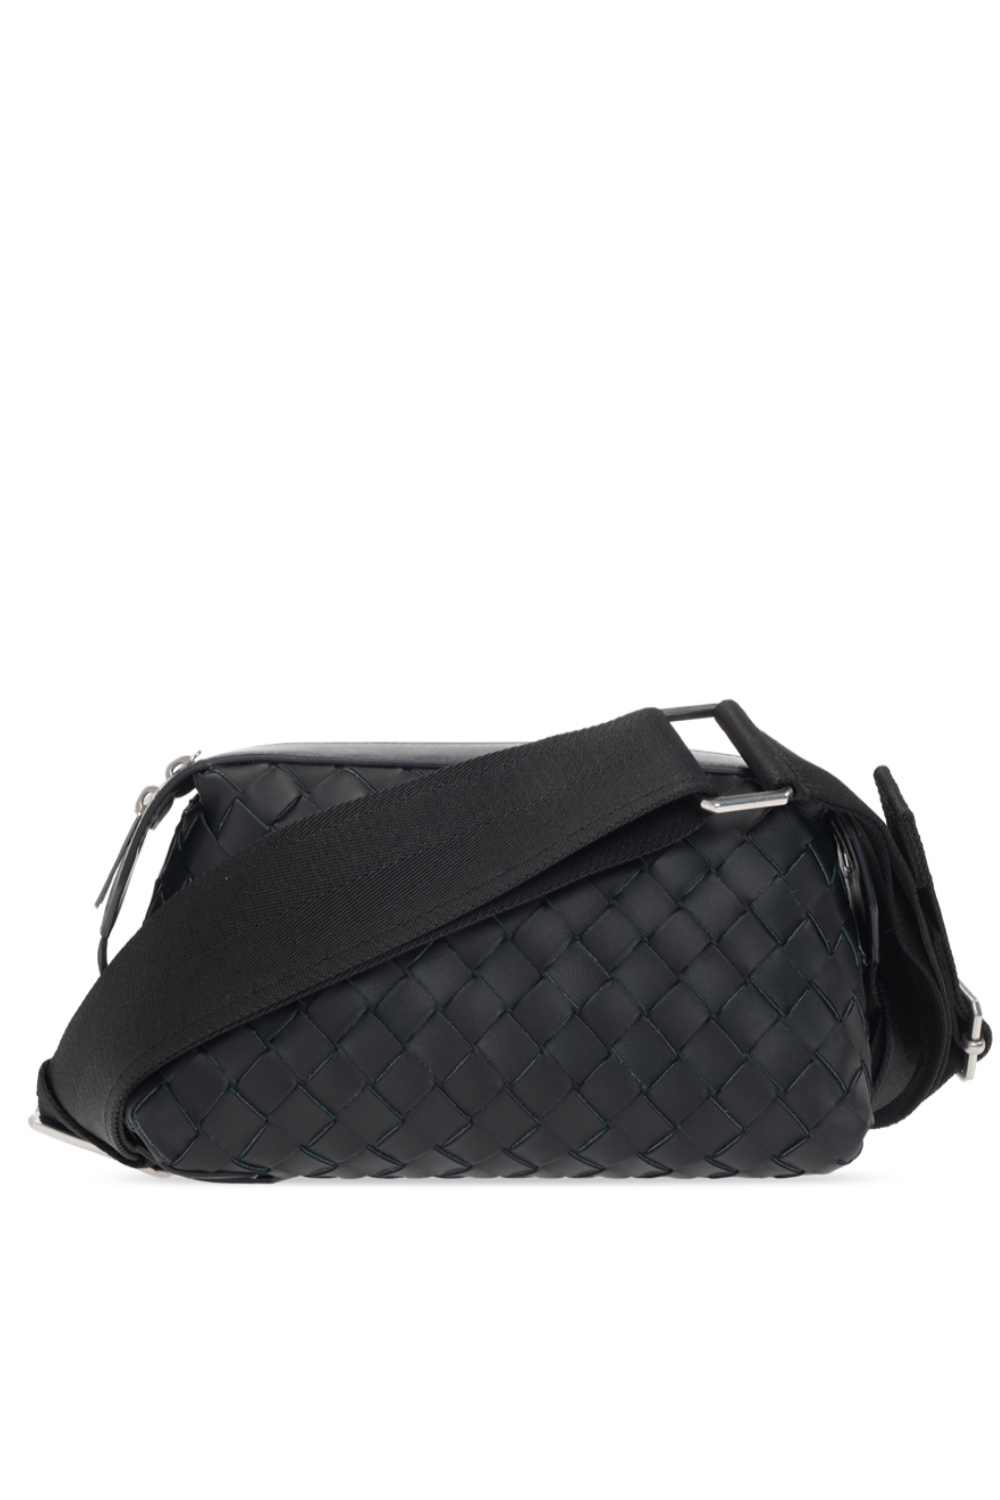 bottega Coat Veneta Shoulder bag with ‘Intrecciato’ weave